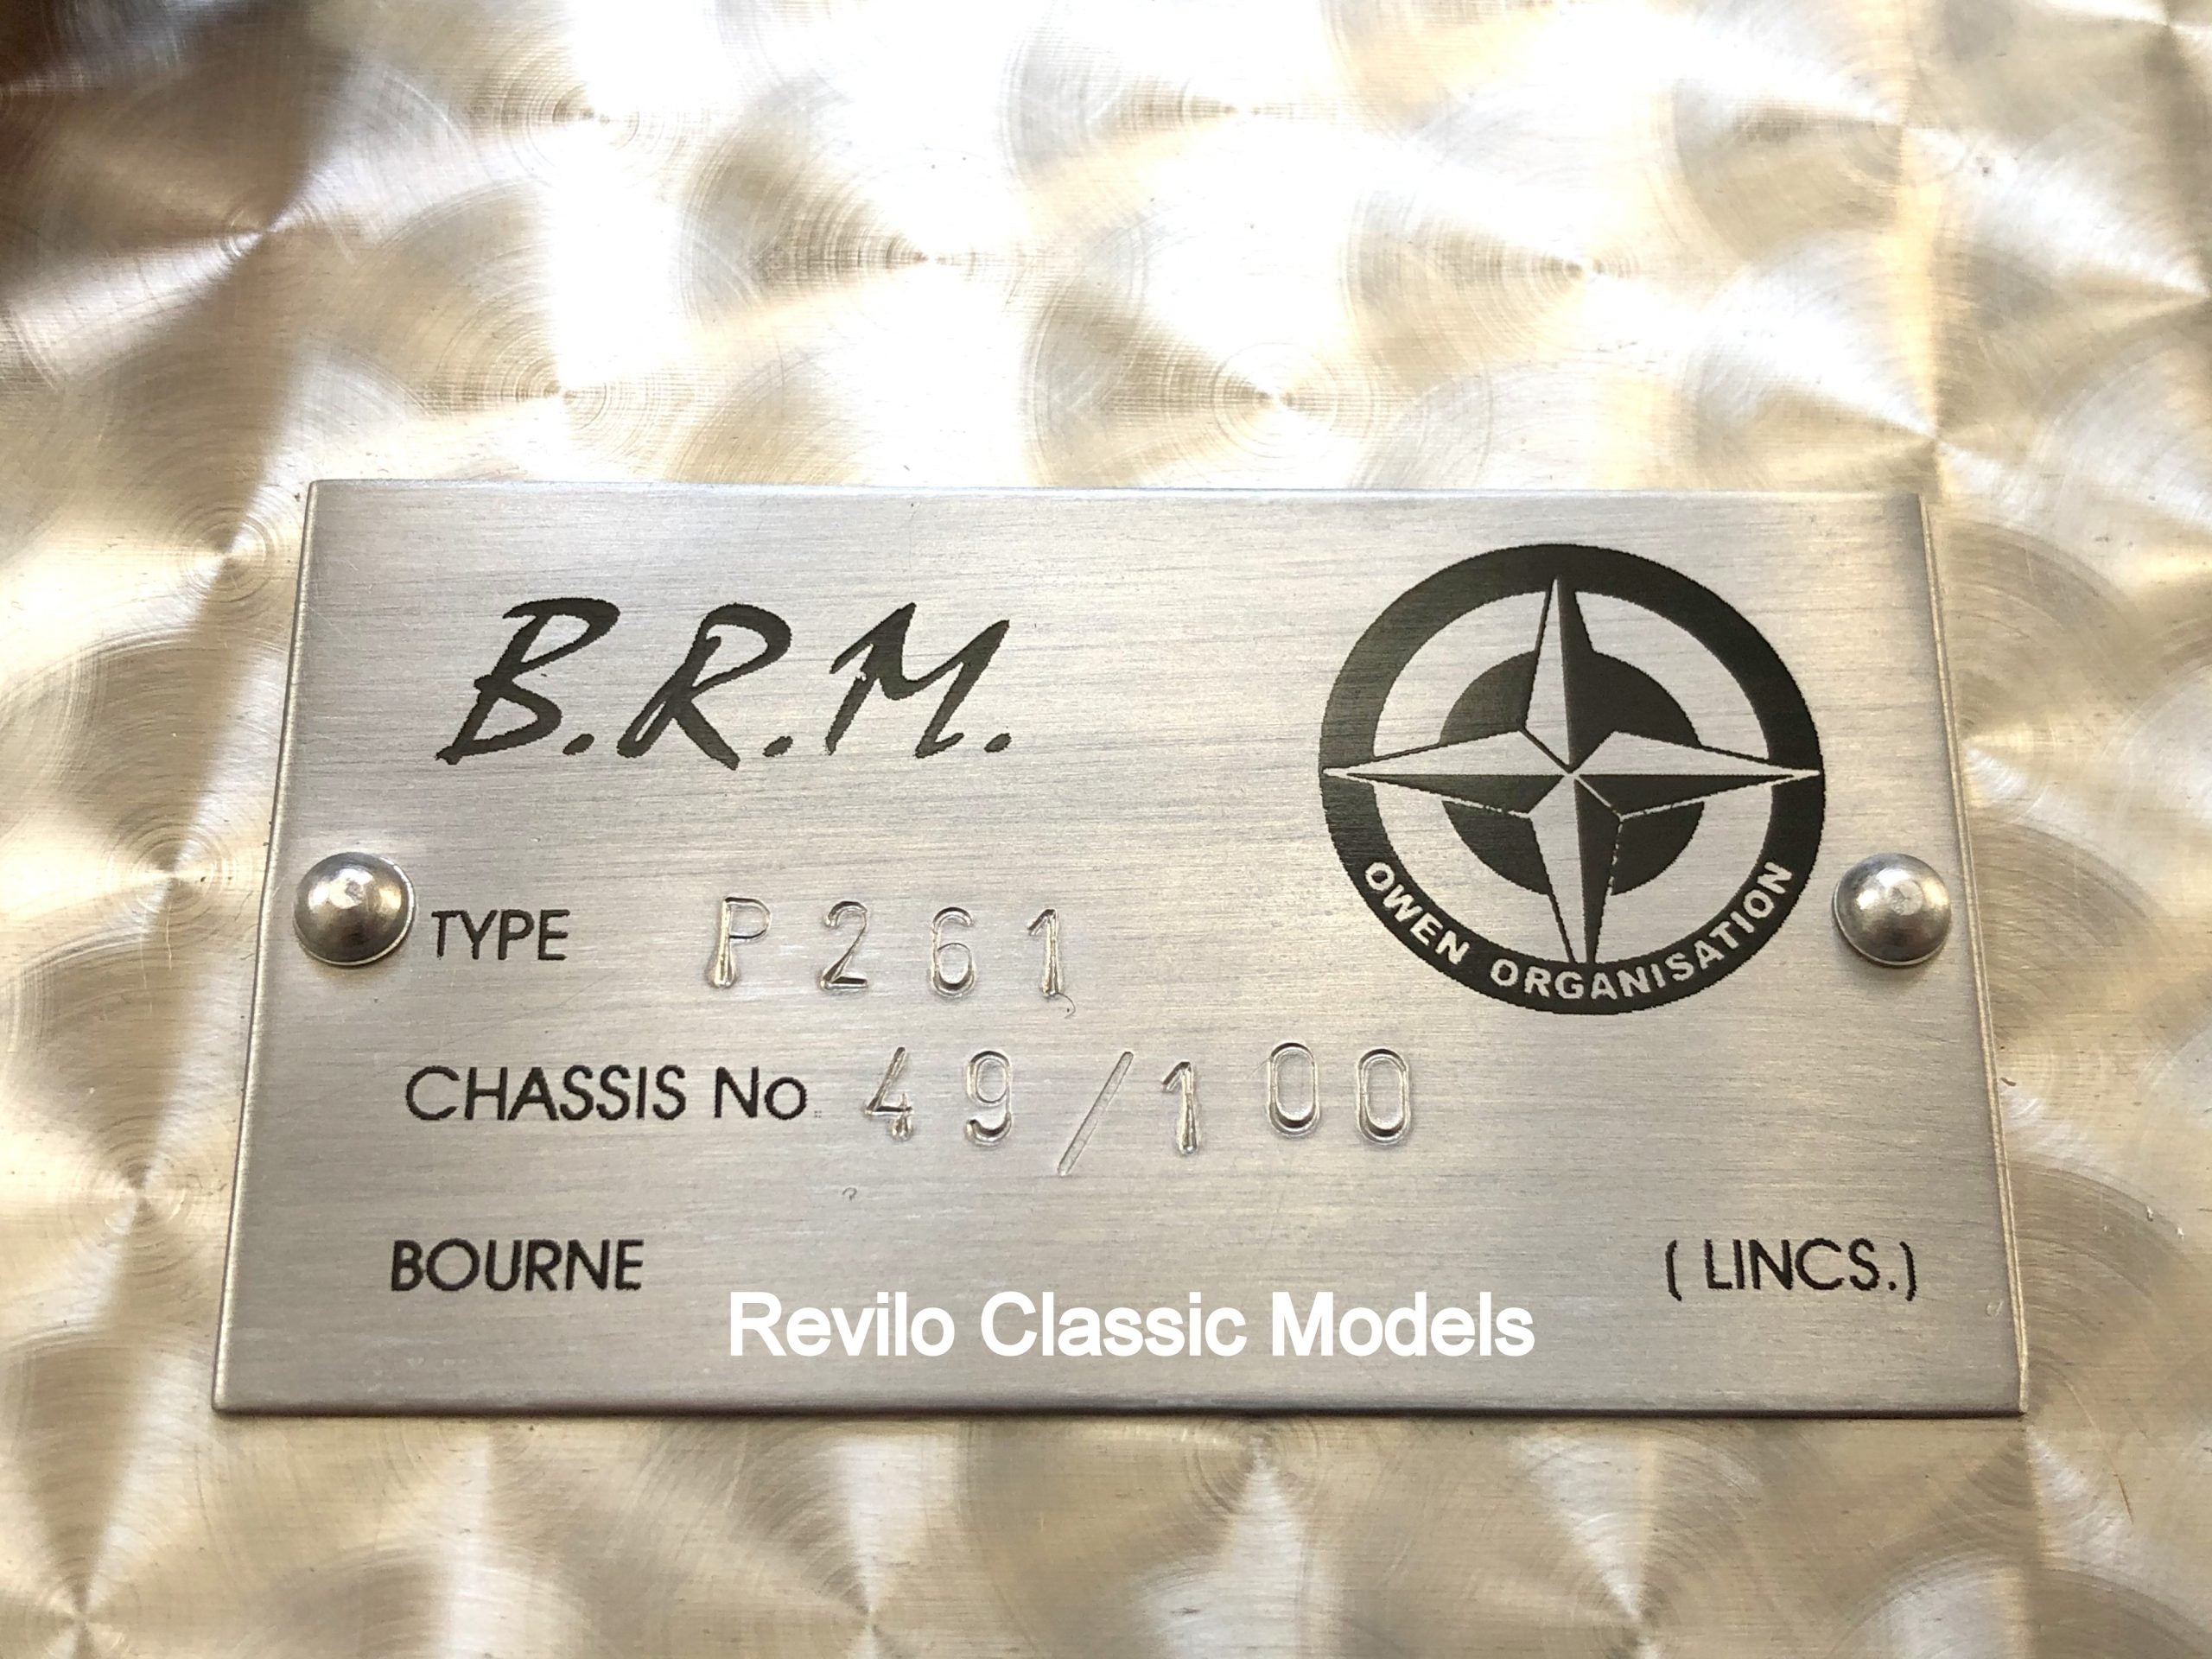 BRM P261 1:8 scale model by Javan Smith